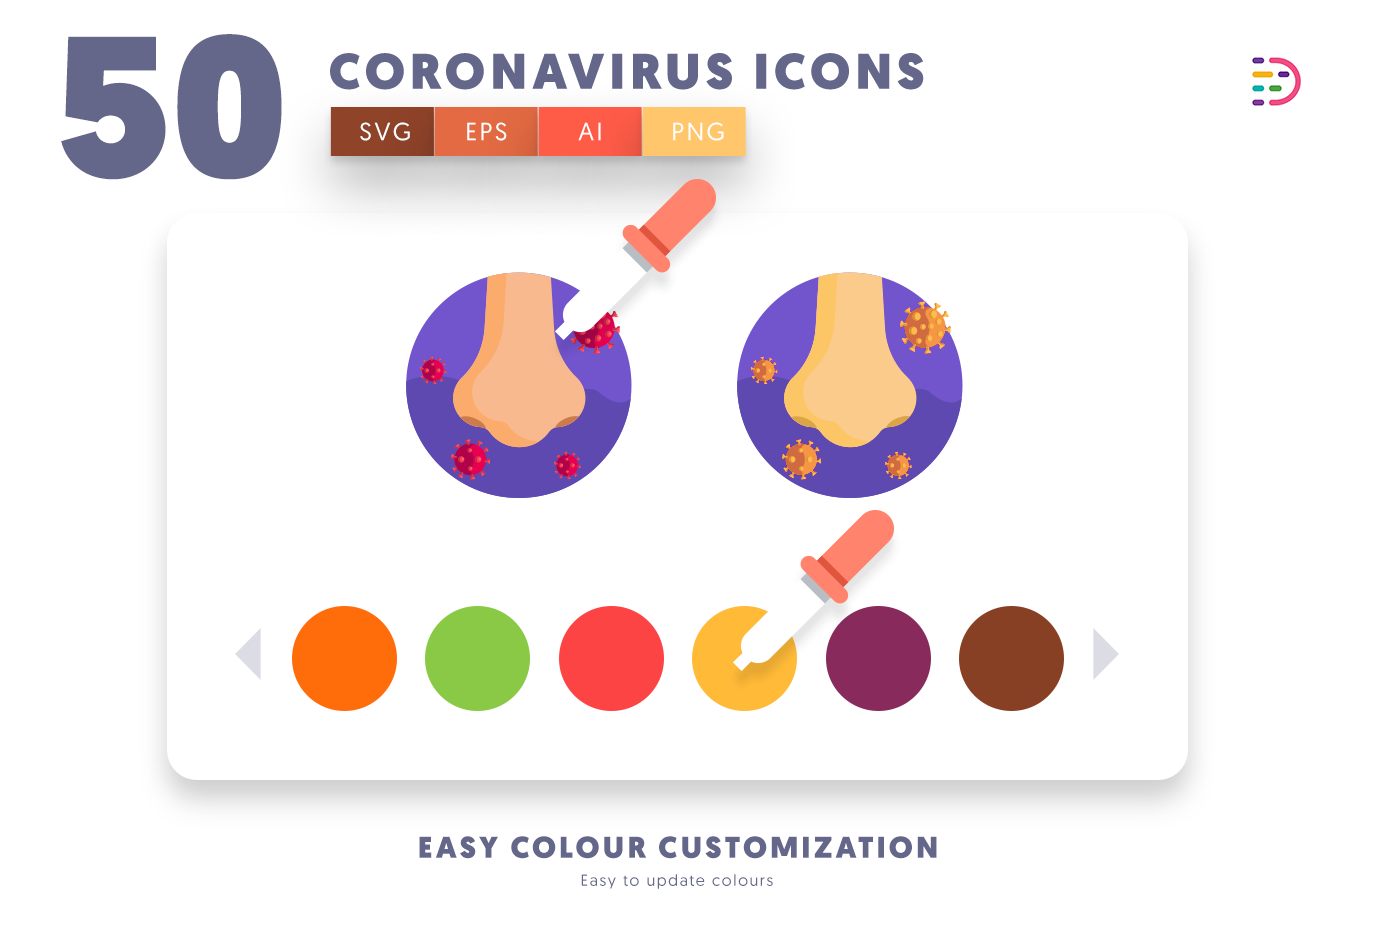  full vector Coronavirus Transmission Icons